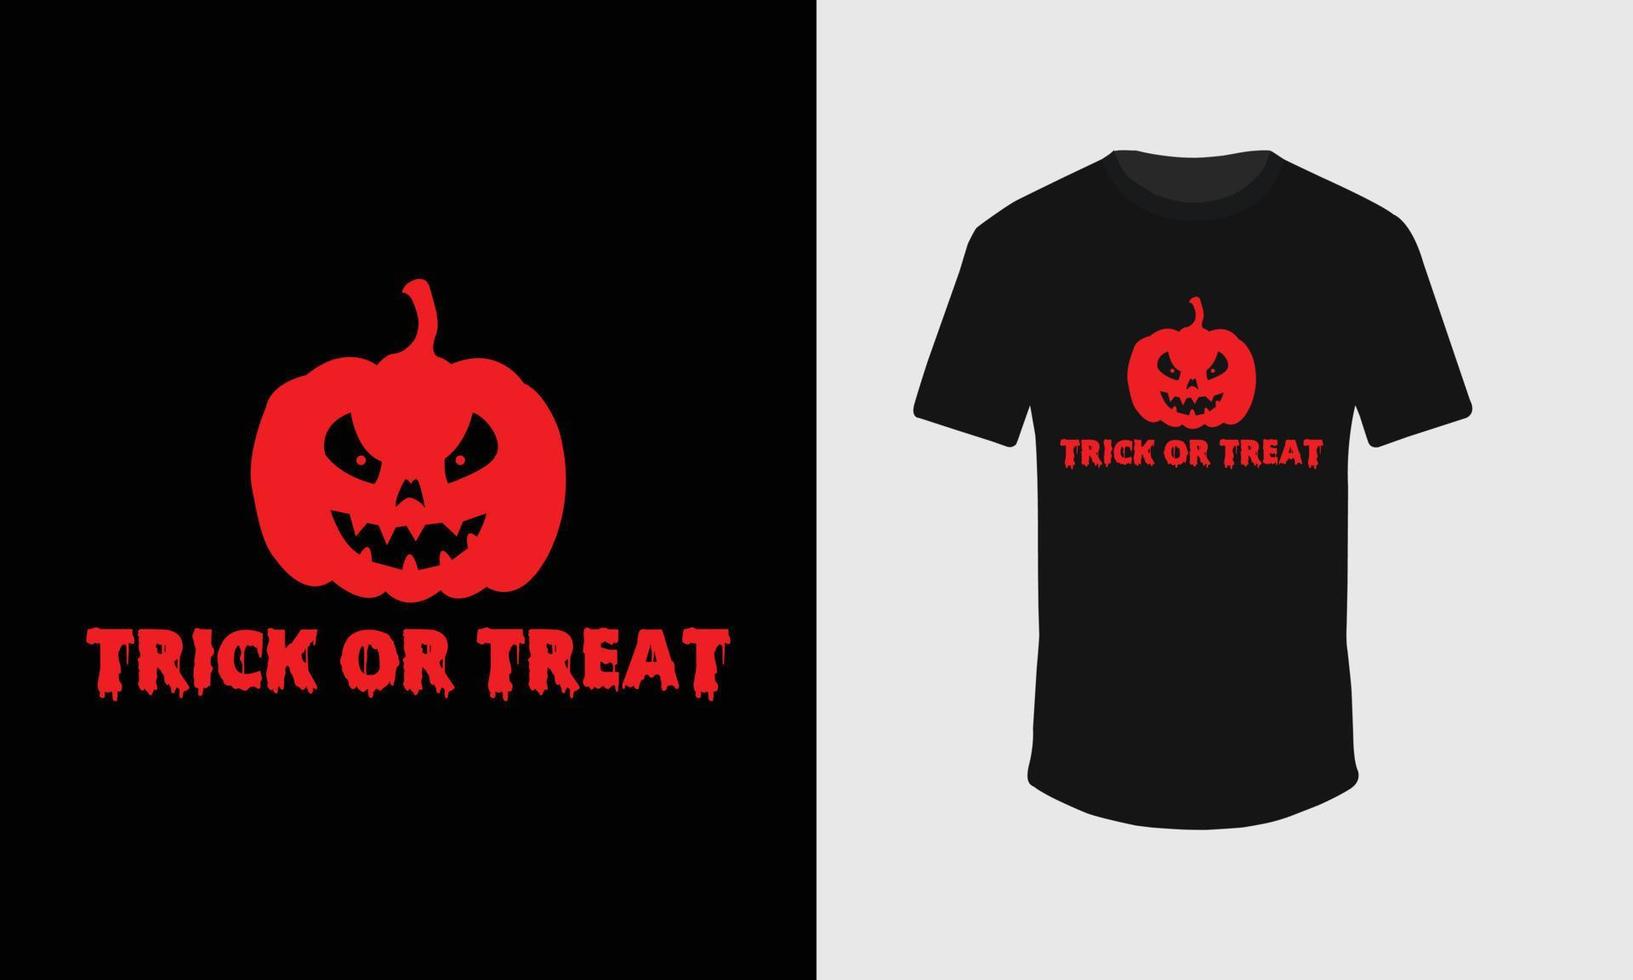 Halloween t-shirt design vector